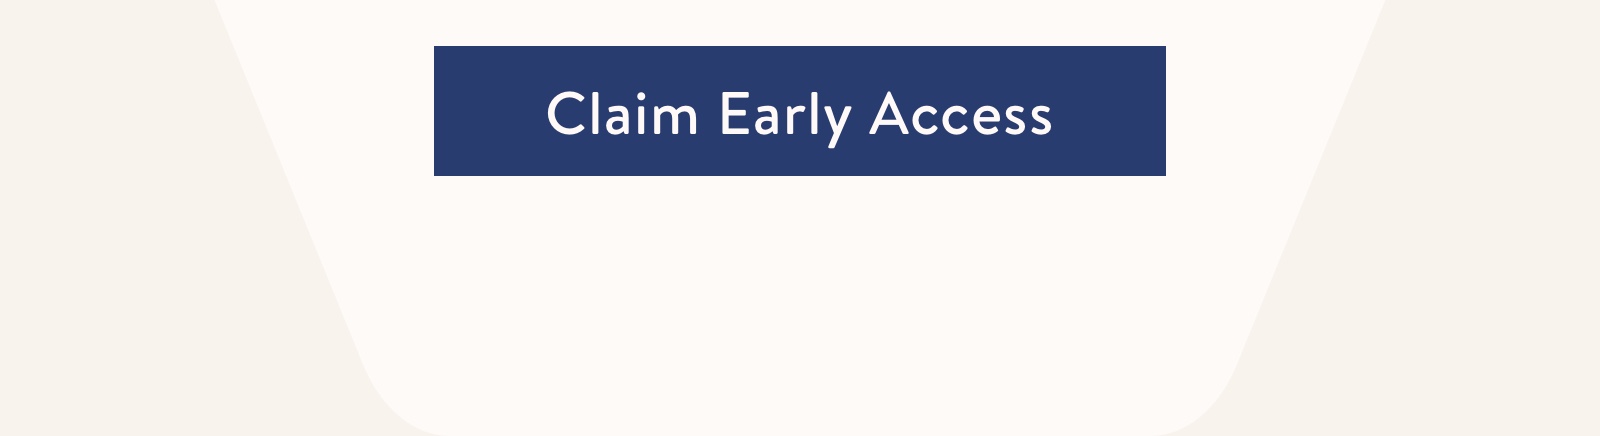 Claim Early Access